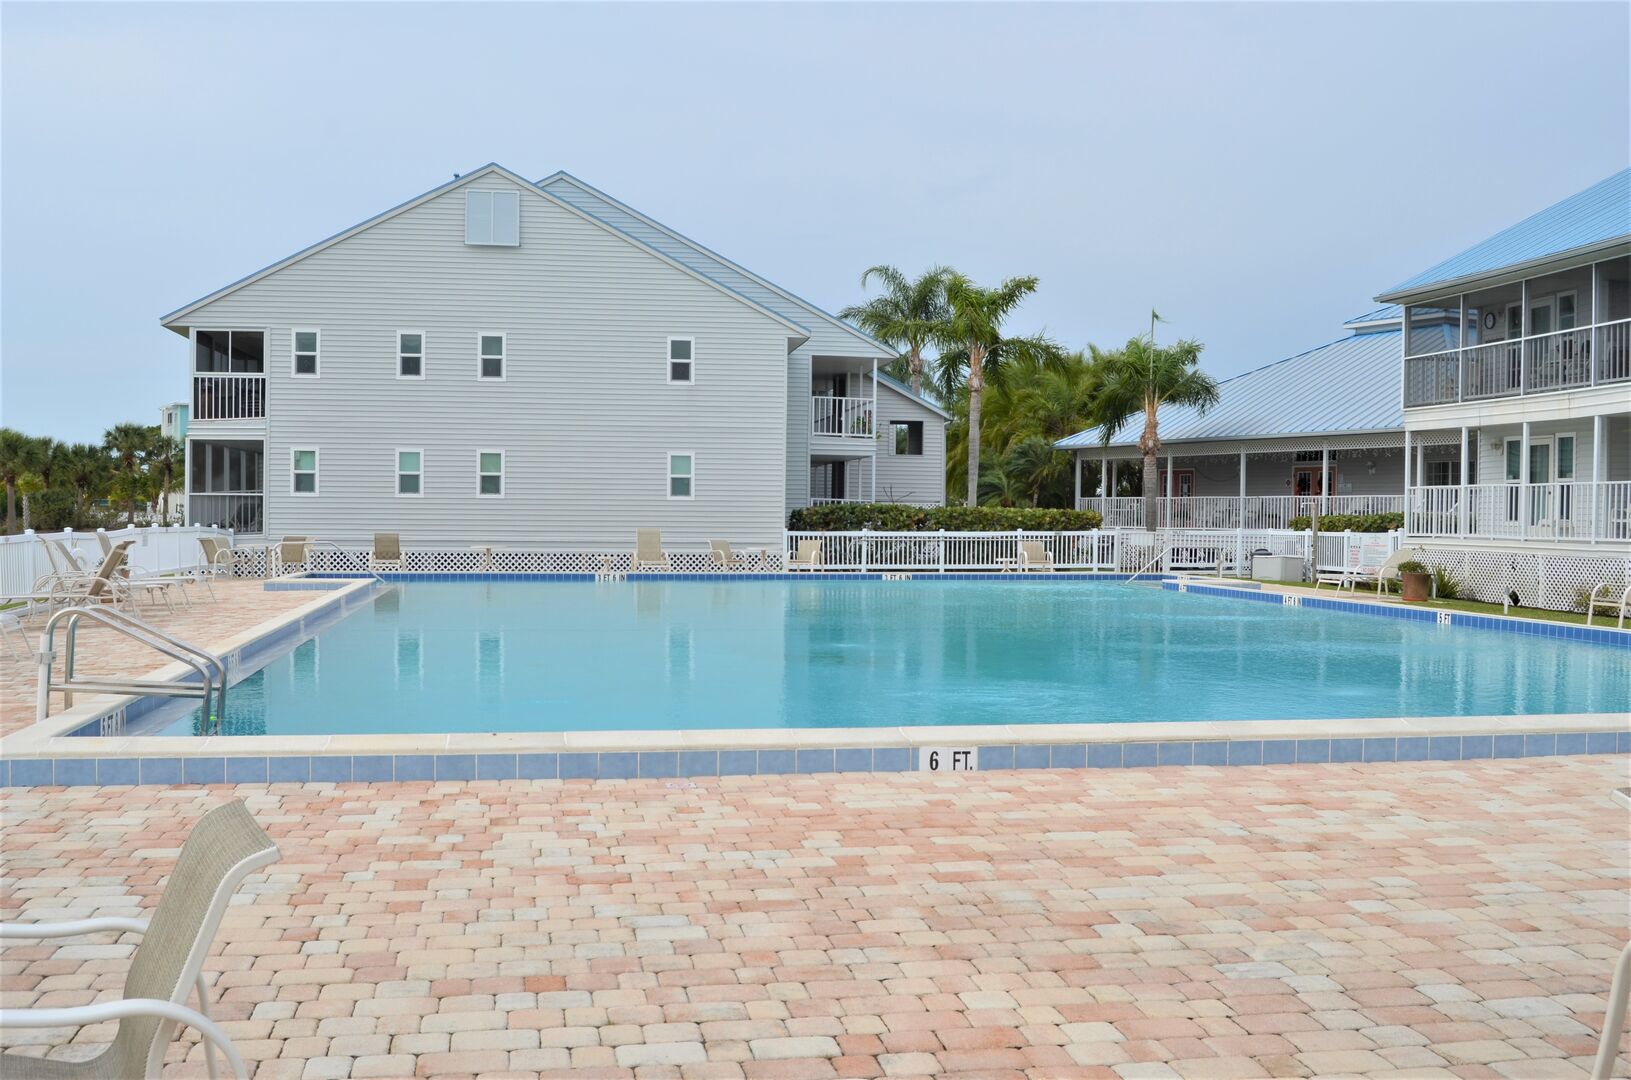 Private resort community pool.